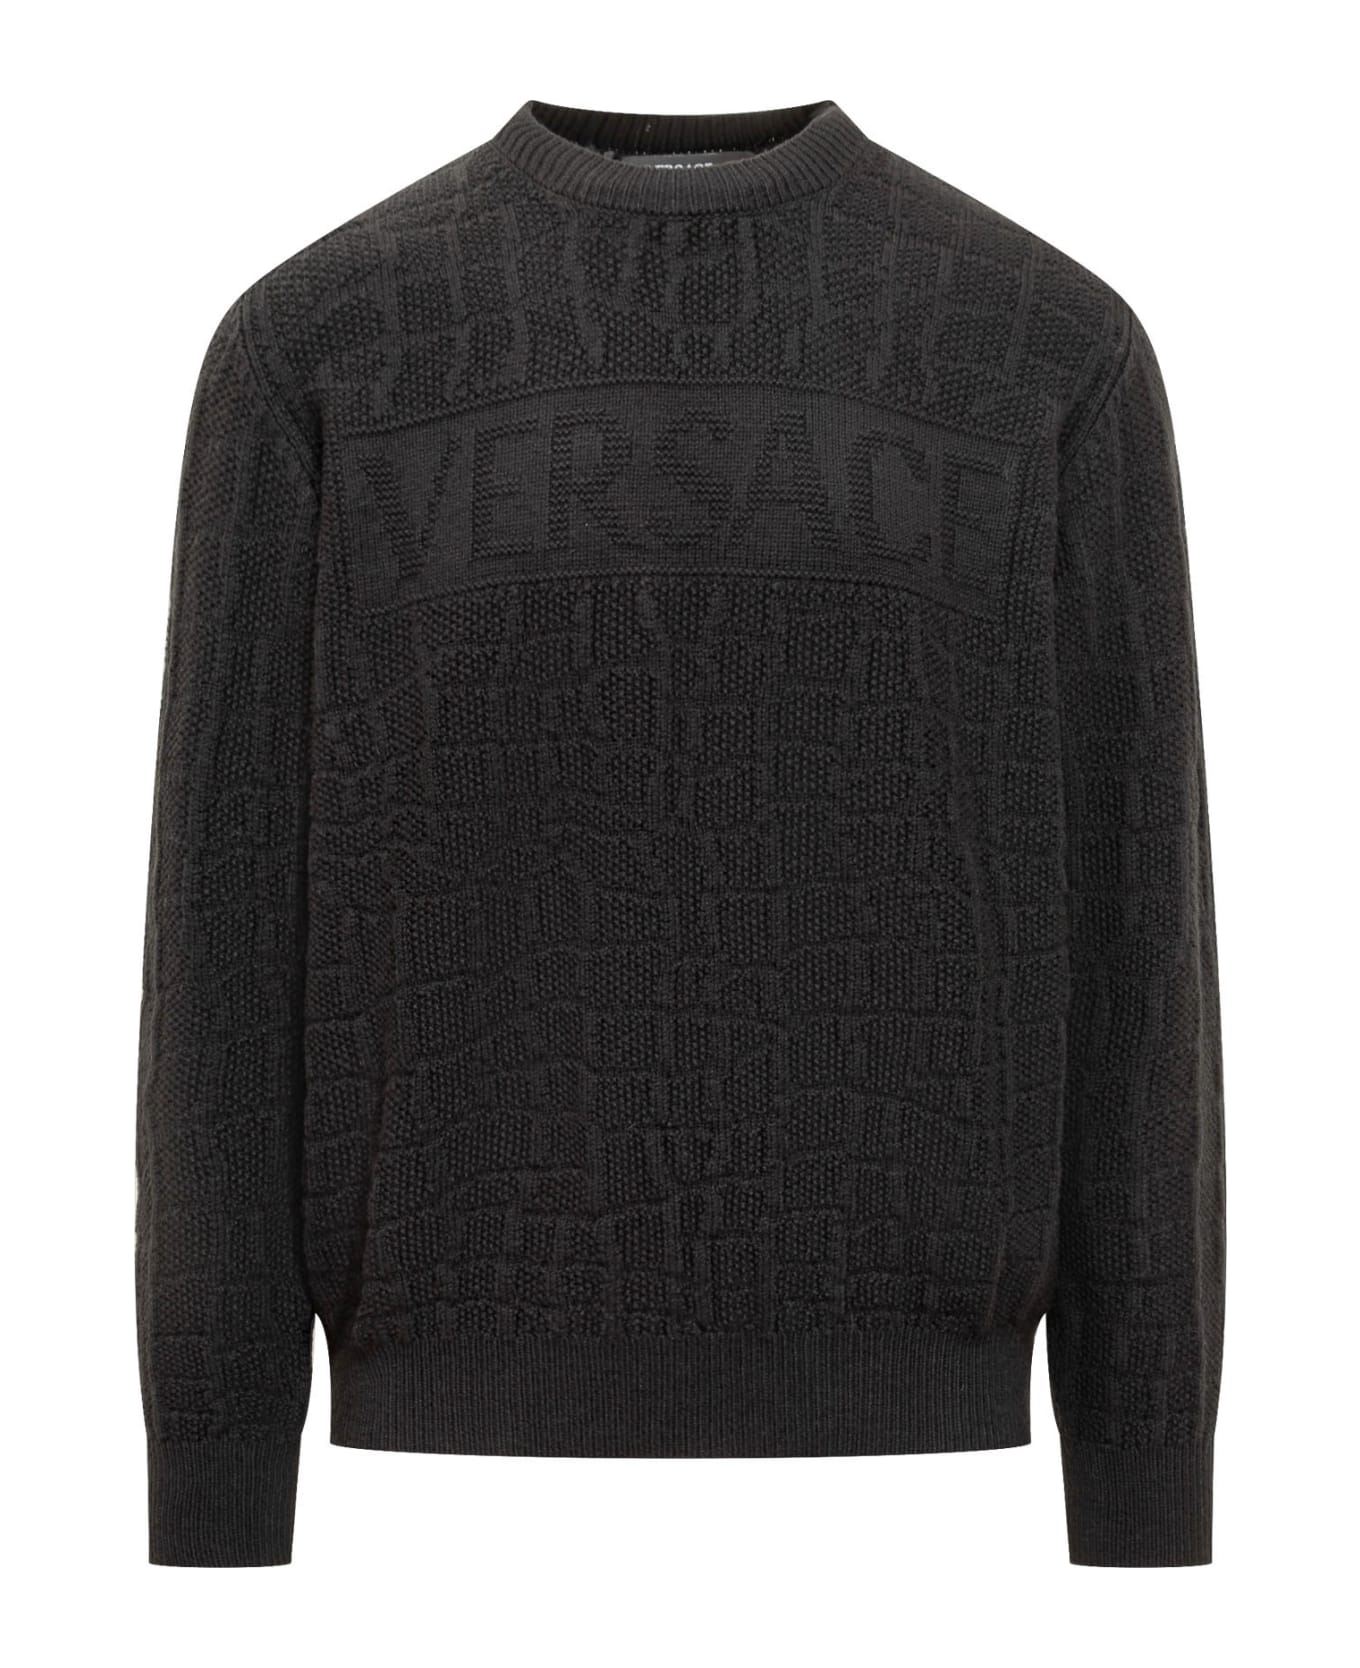 Versace Crew-neck Wool Sweater - black ニットウェア